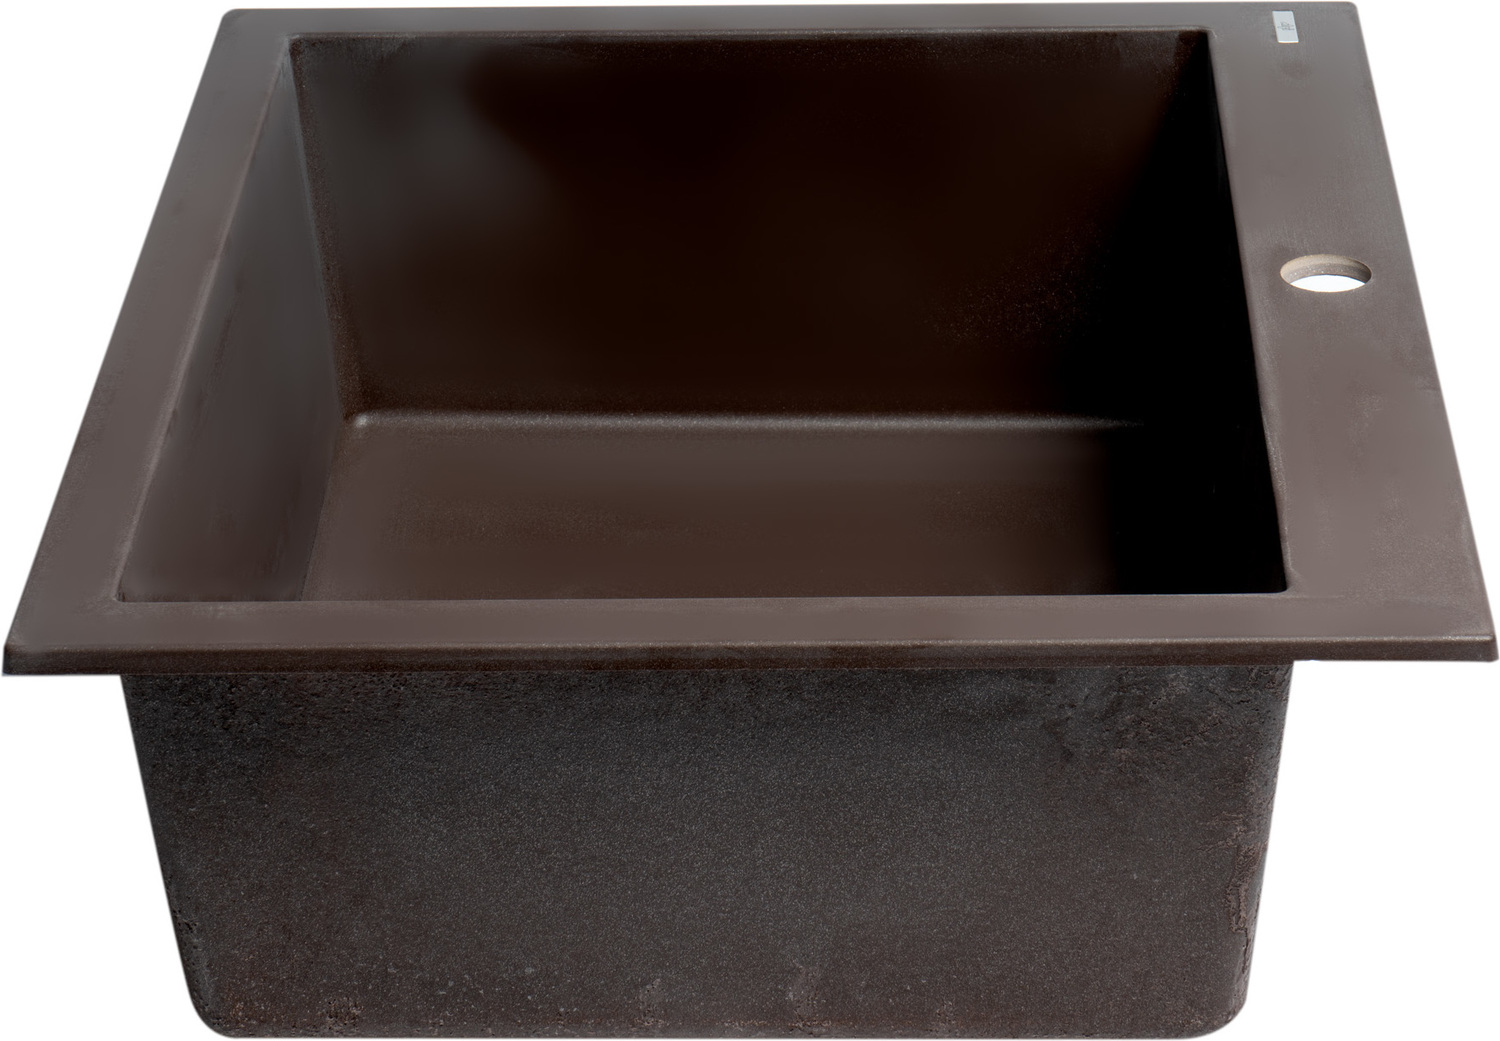  Alfi Kitchen Sink Single Bowl Sinks Chocolate Modern